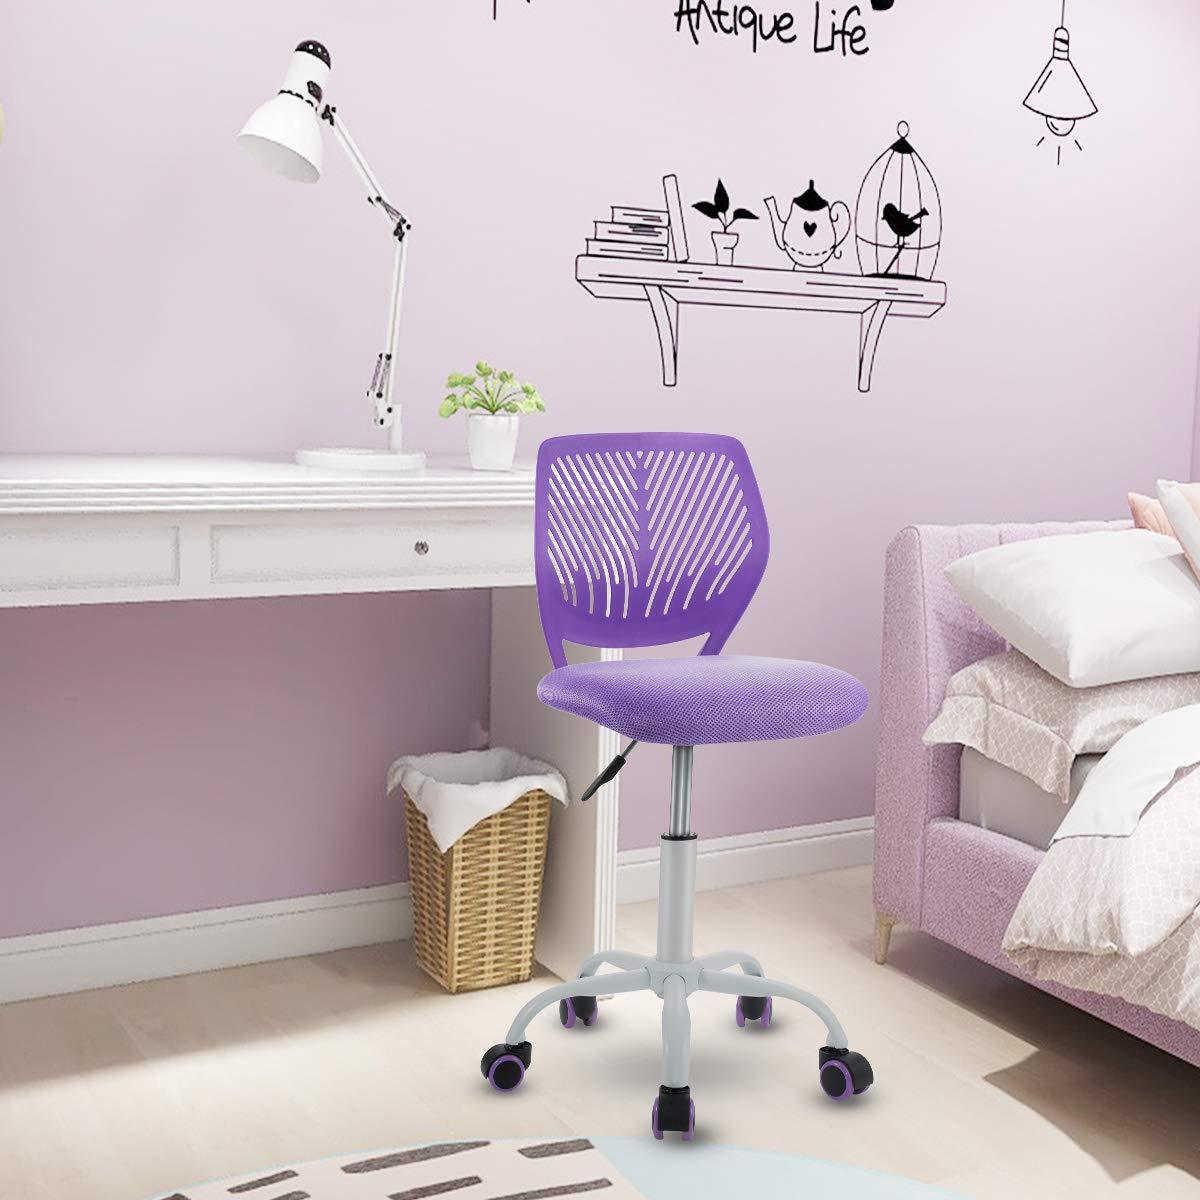 Giantex Kids Desk Chair, Adjustable Children Study Chair